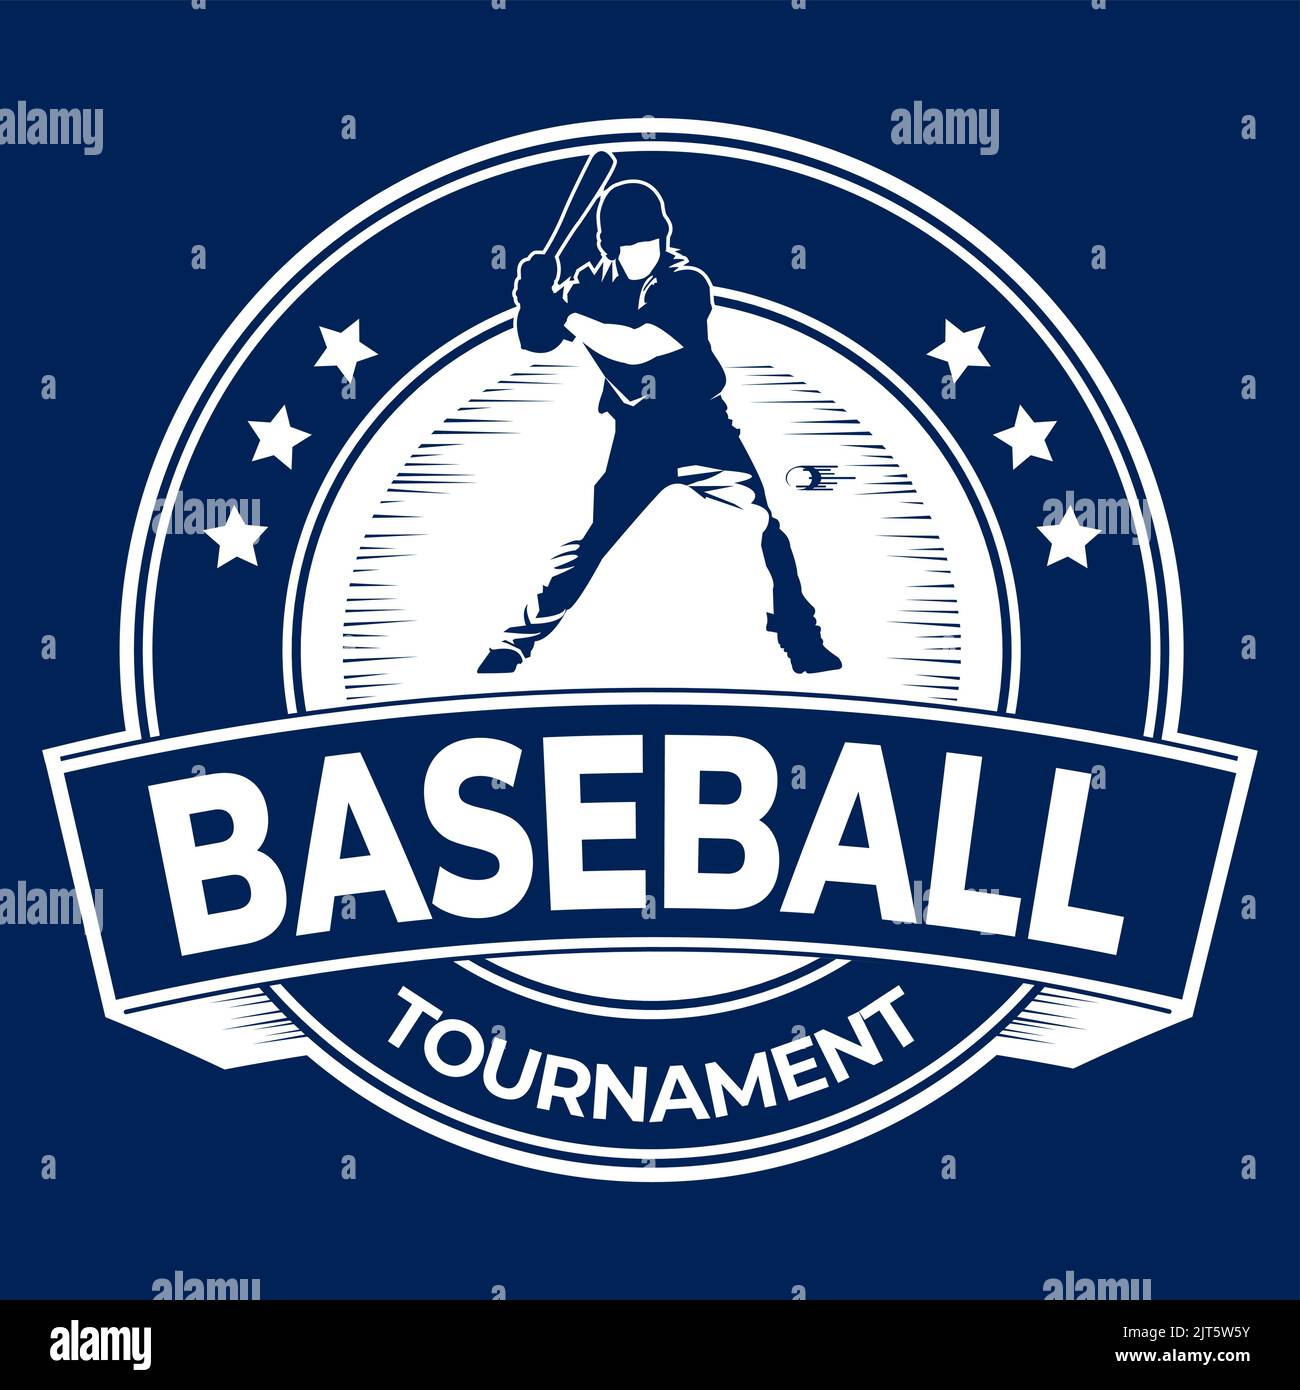 baseball tournament logos